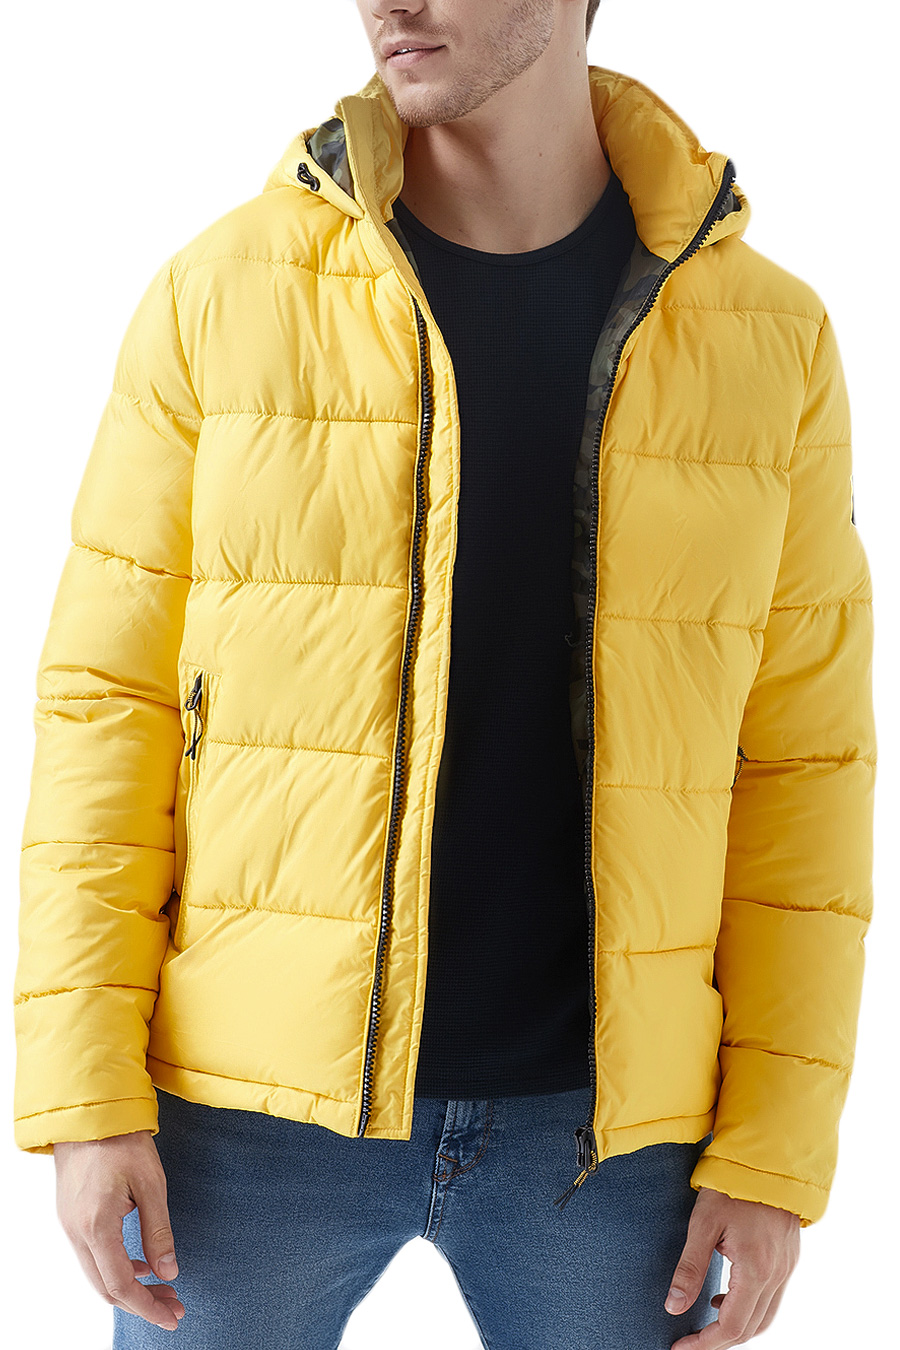 Winter jacket MAVI 010310-32173